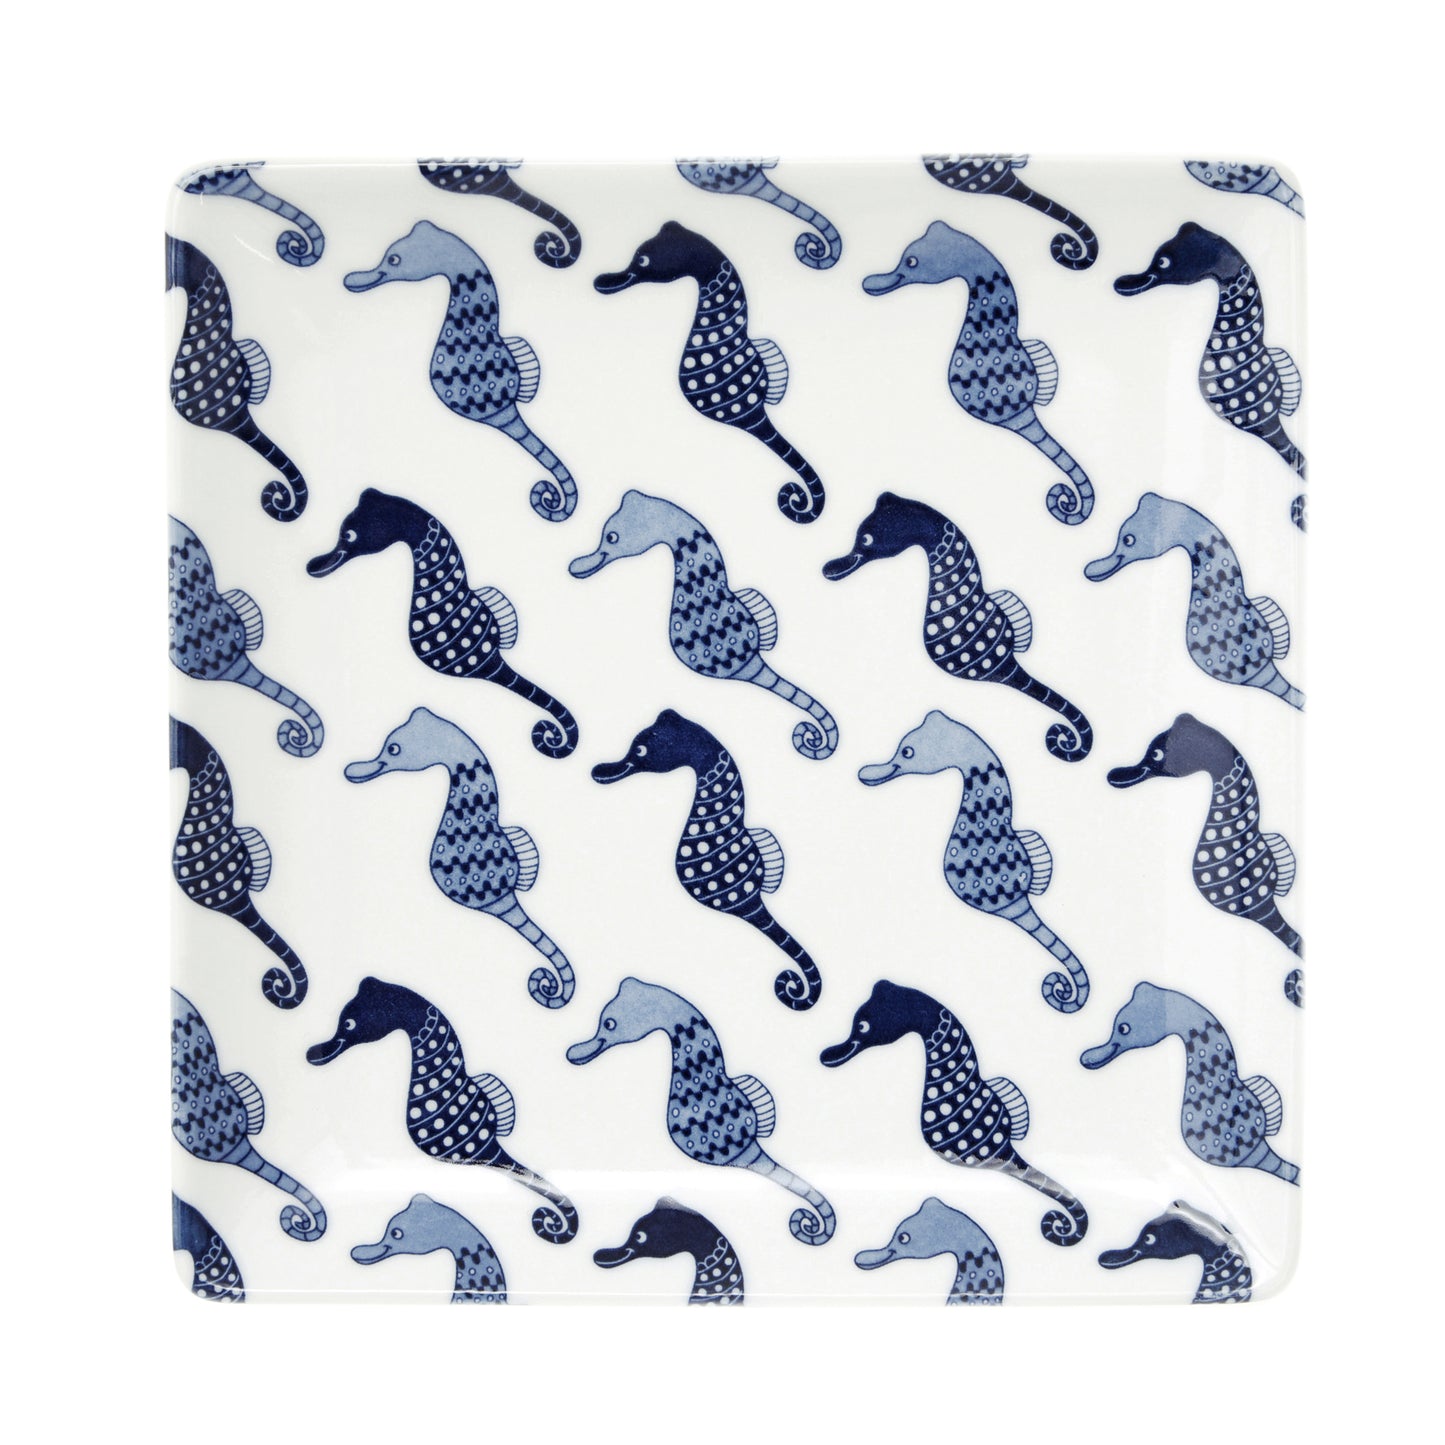 [Hasami ware] [natural69] [cocomarine x Janke] [conformal plate] Cocomarine Yanke fish saltwater fish tableware Nordic style square plate pattern pattern